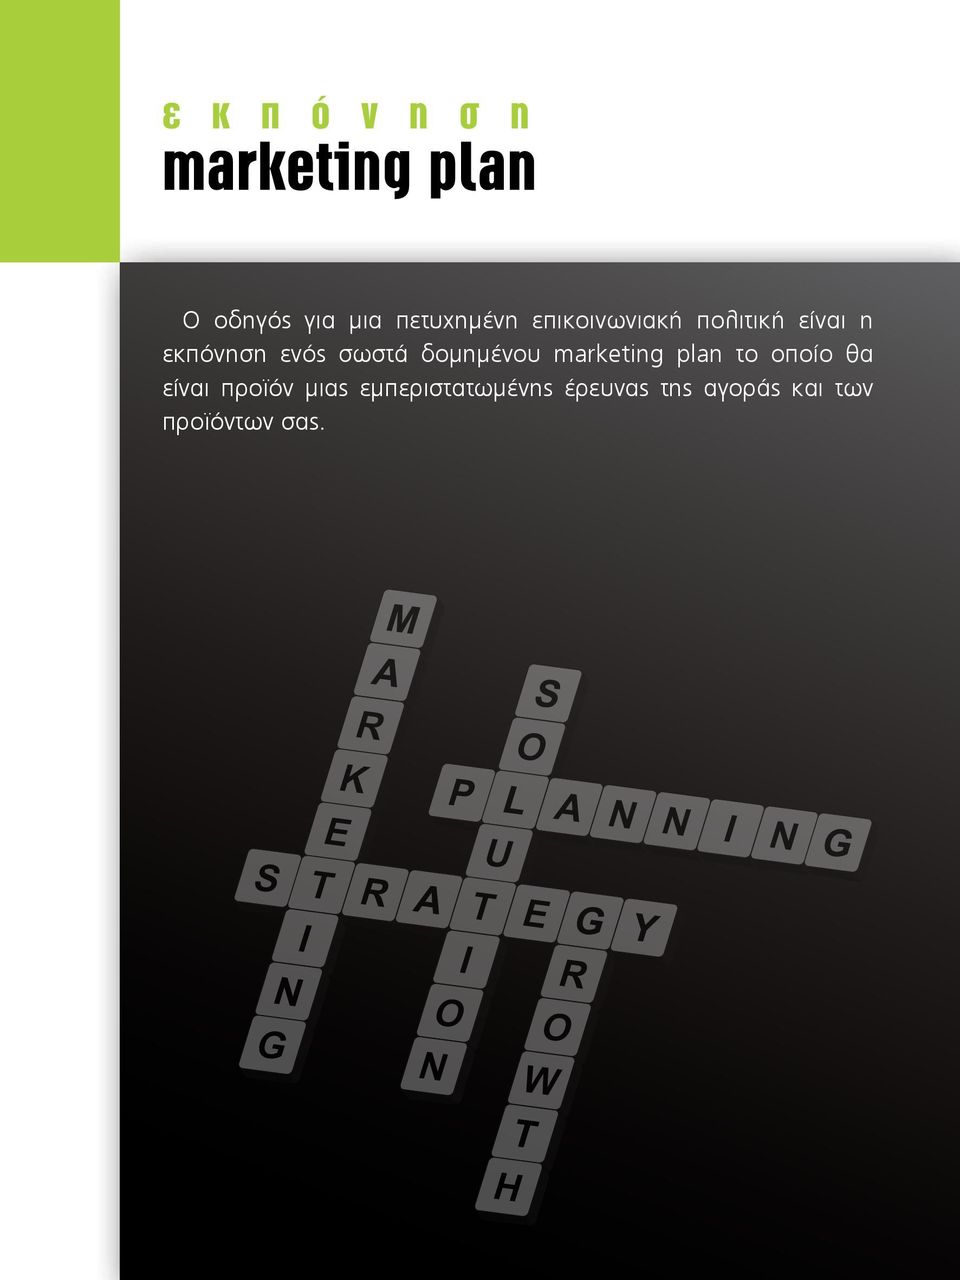 marketing plan το οποίο θα είναι προϊόν μιας